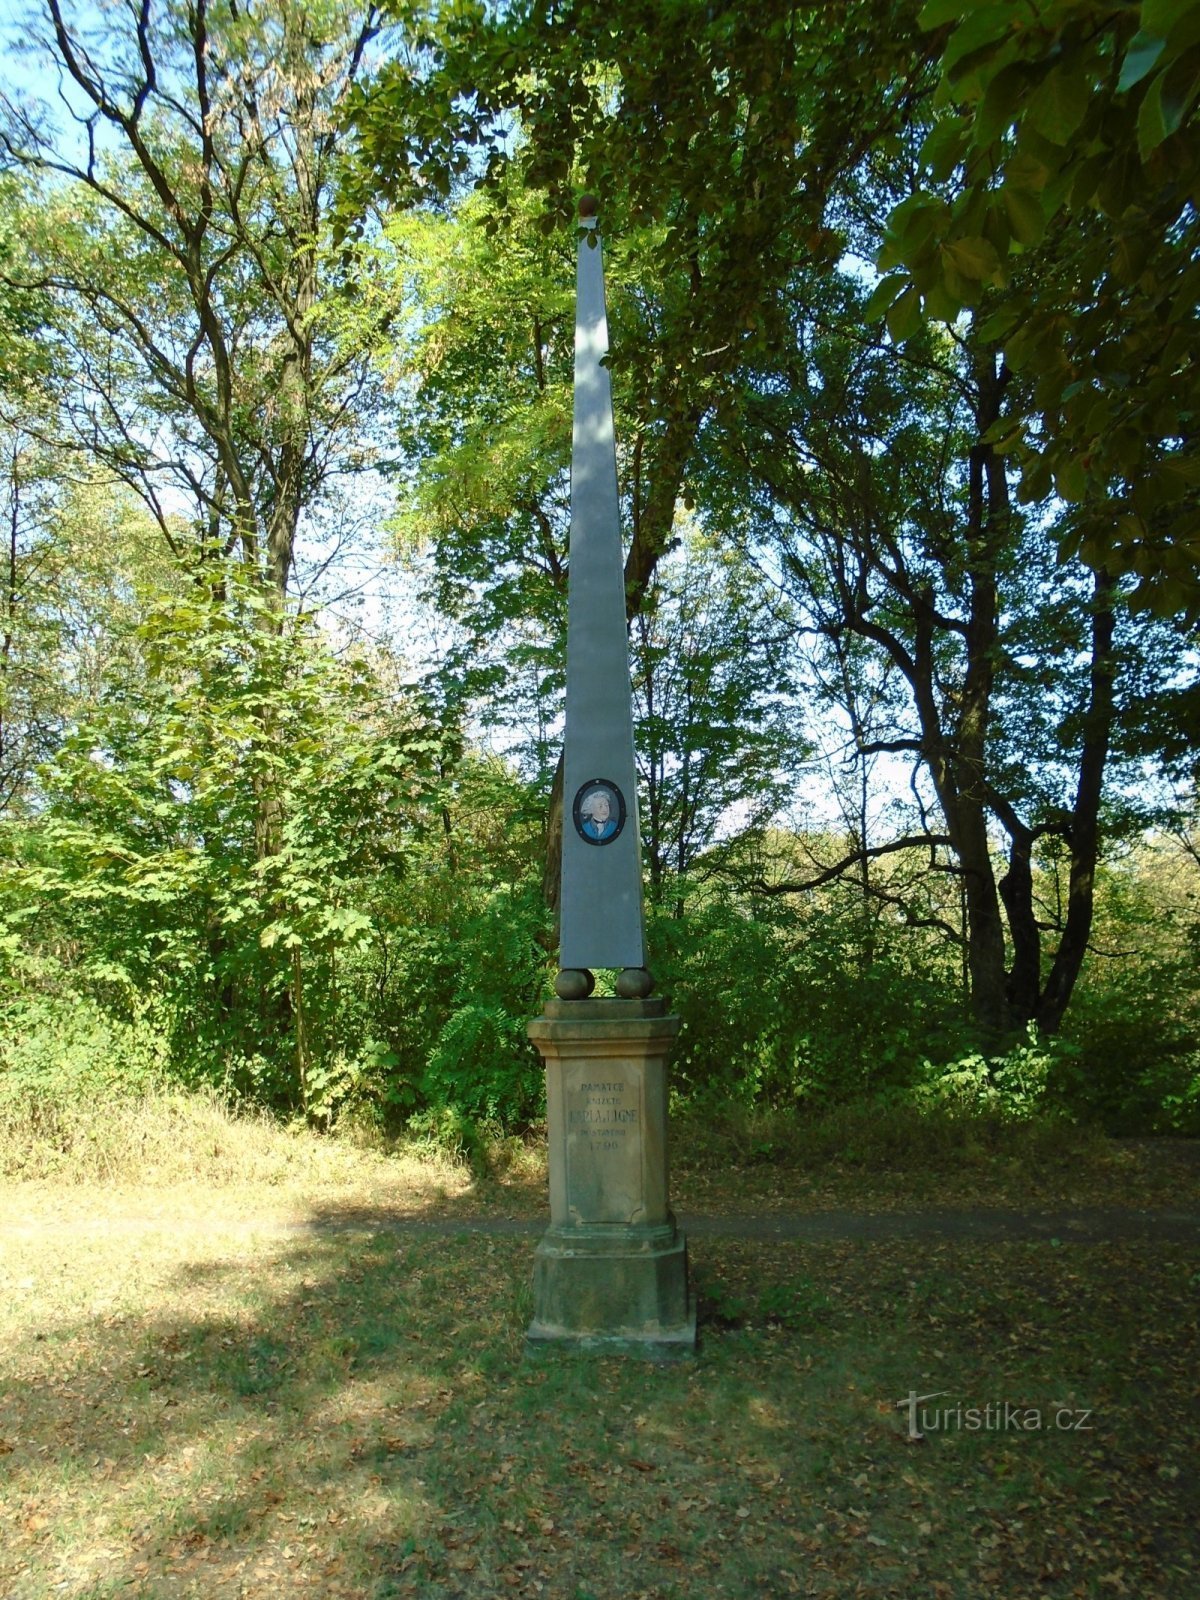 Obelisk princa Karla de Ligneja (Josefov, 17.8.2018. XNUMX. XNUMX)